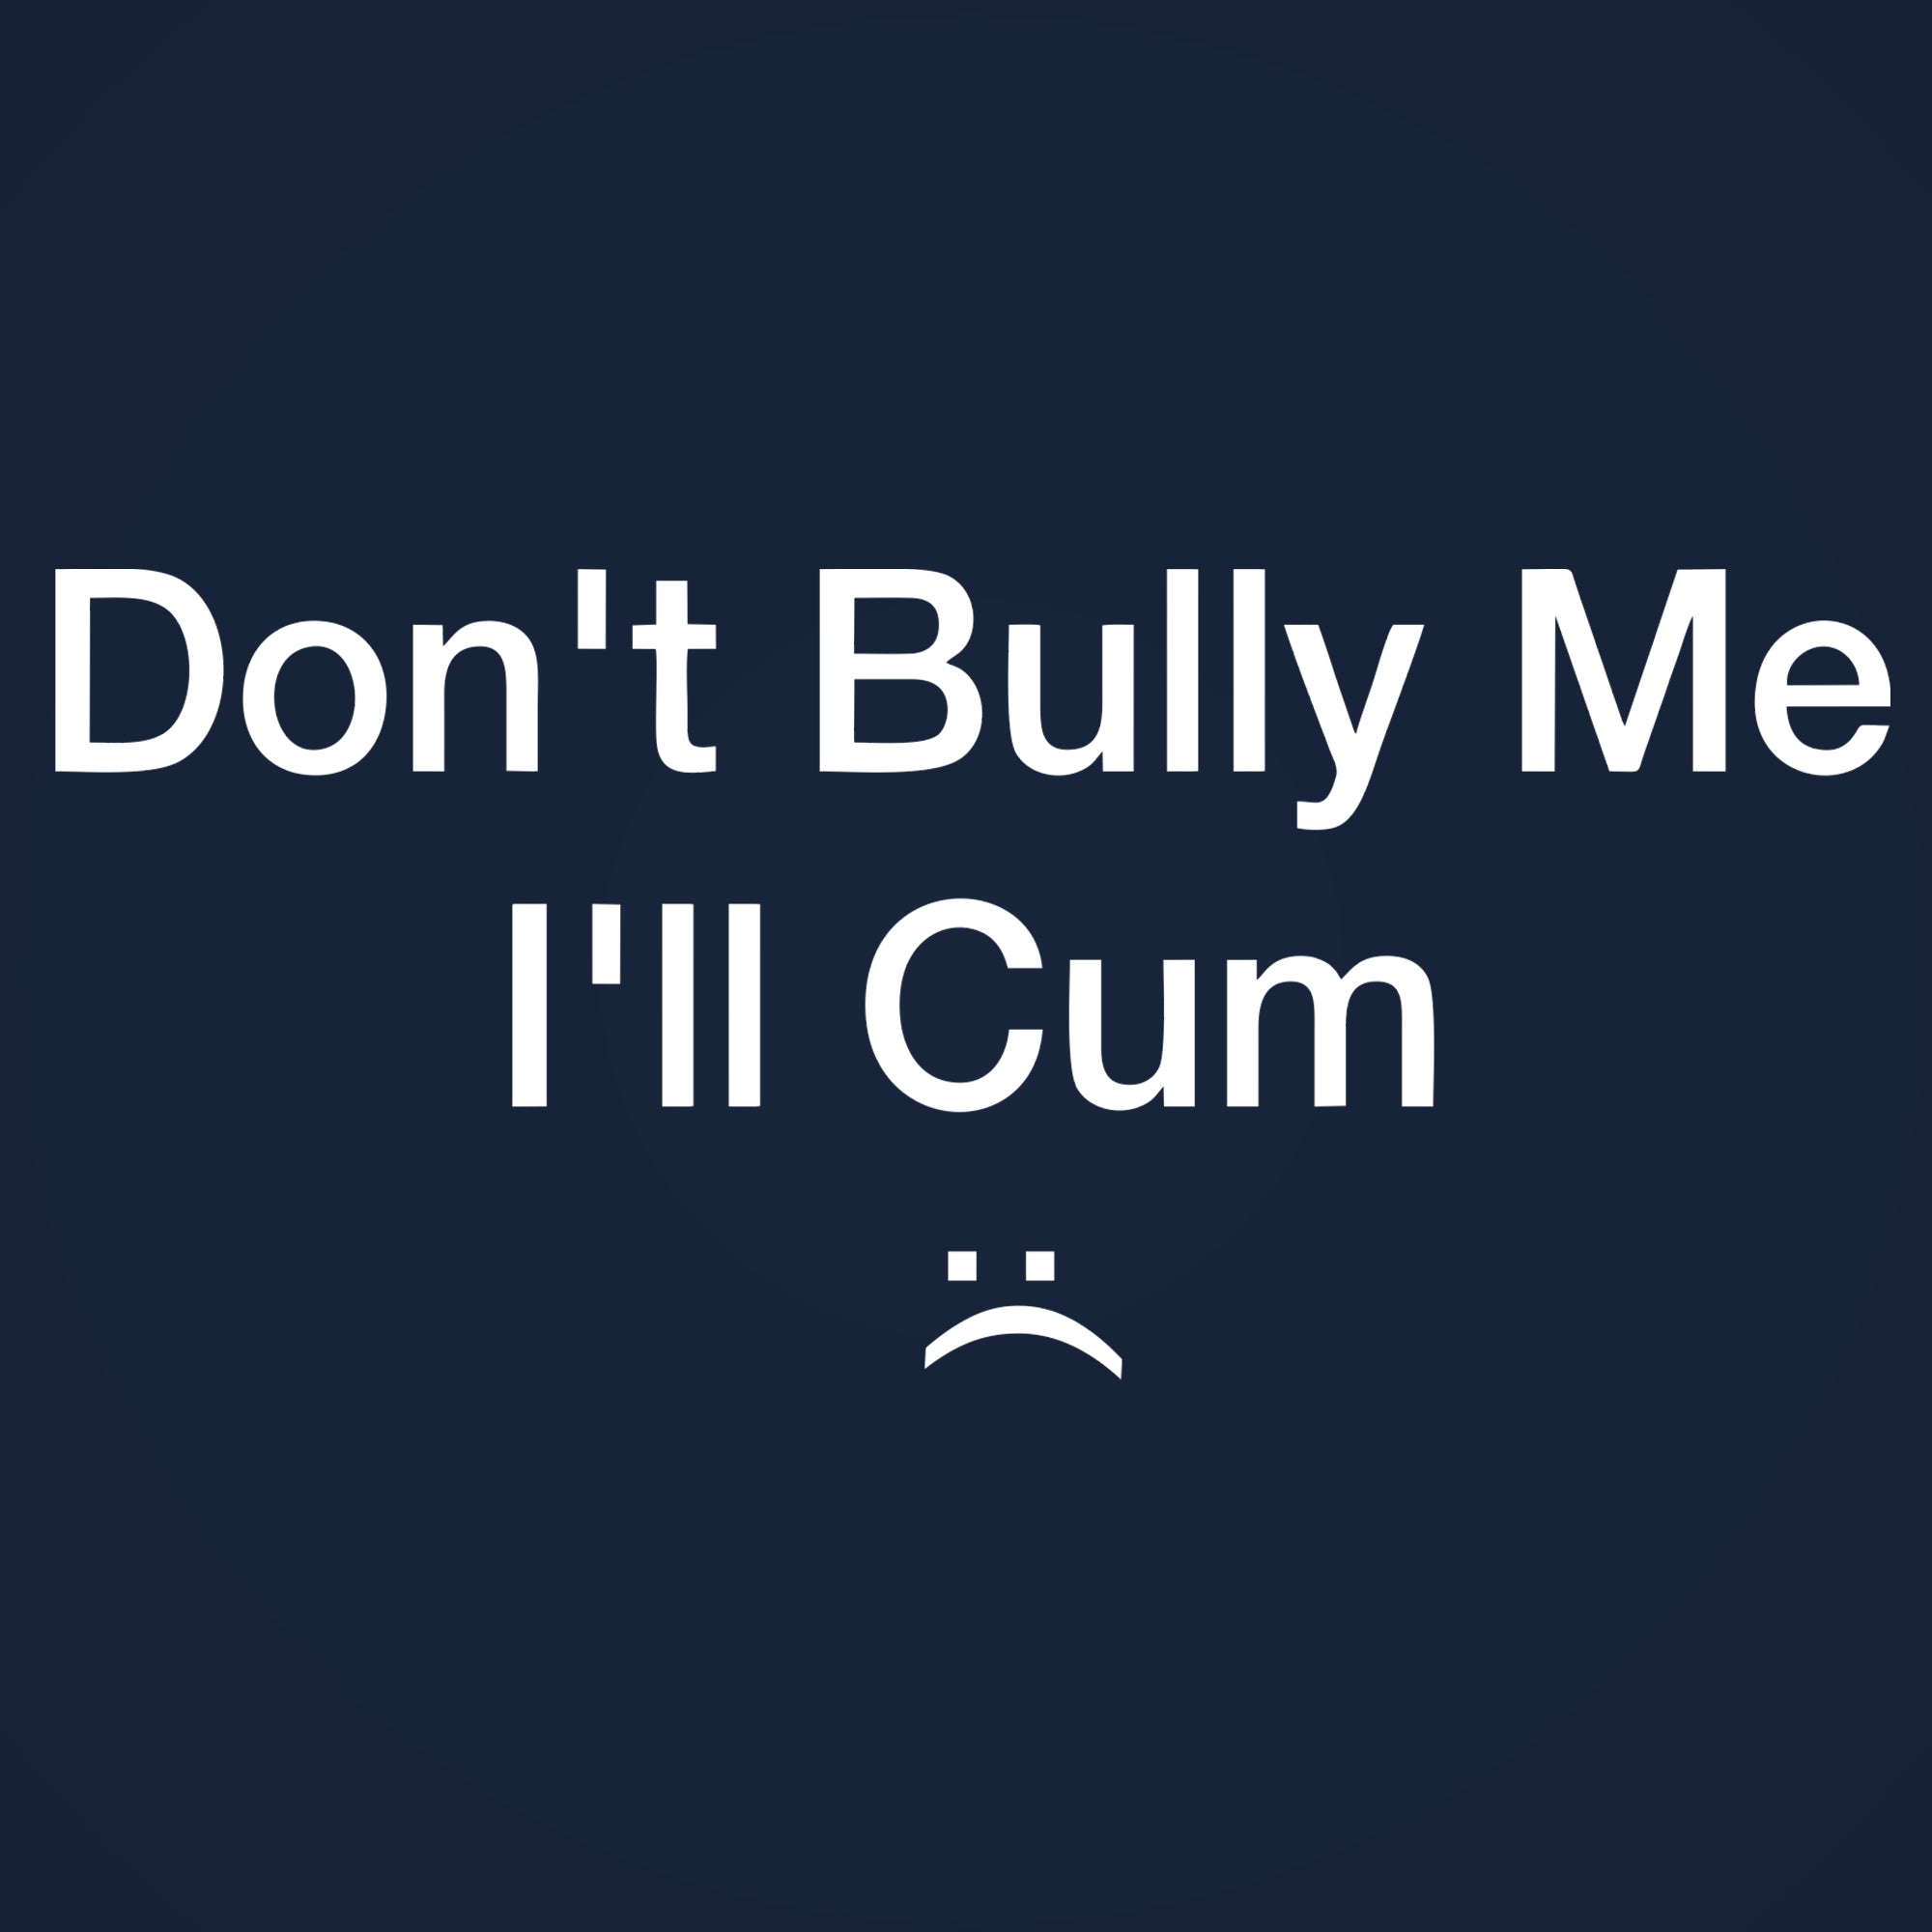 Don't Bully Me I'll Cum Tshirt - Donkey Tees